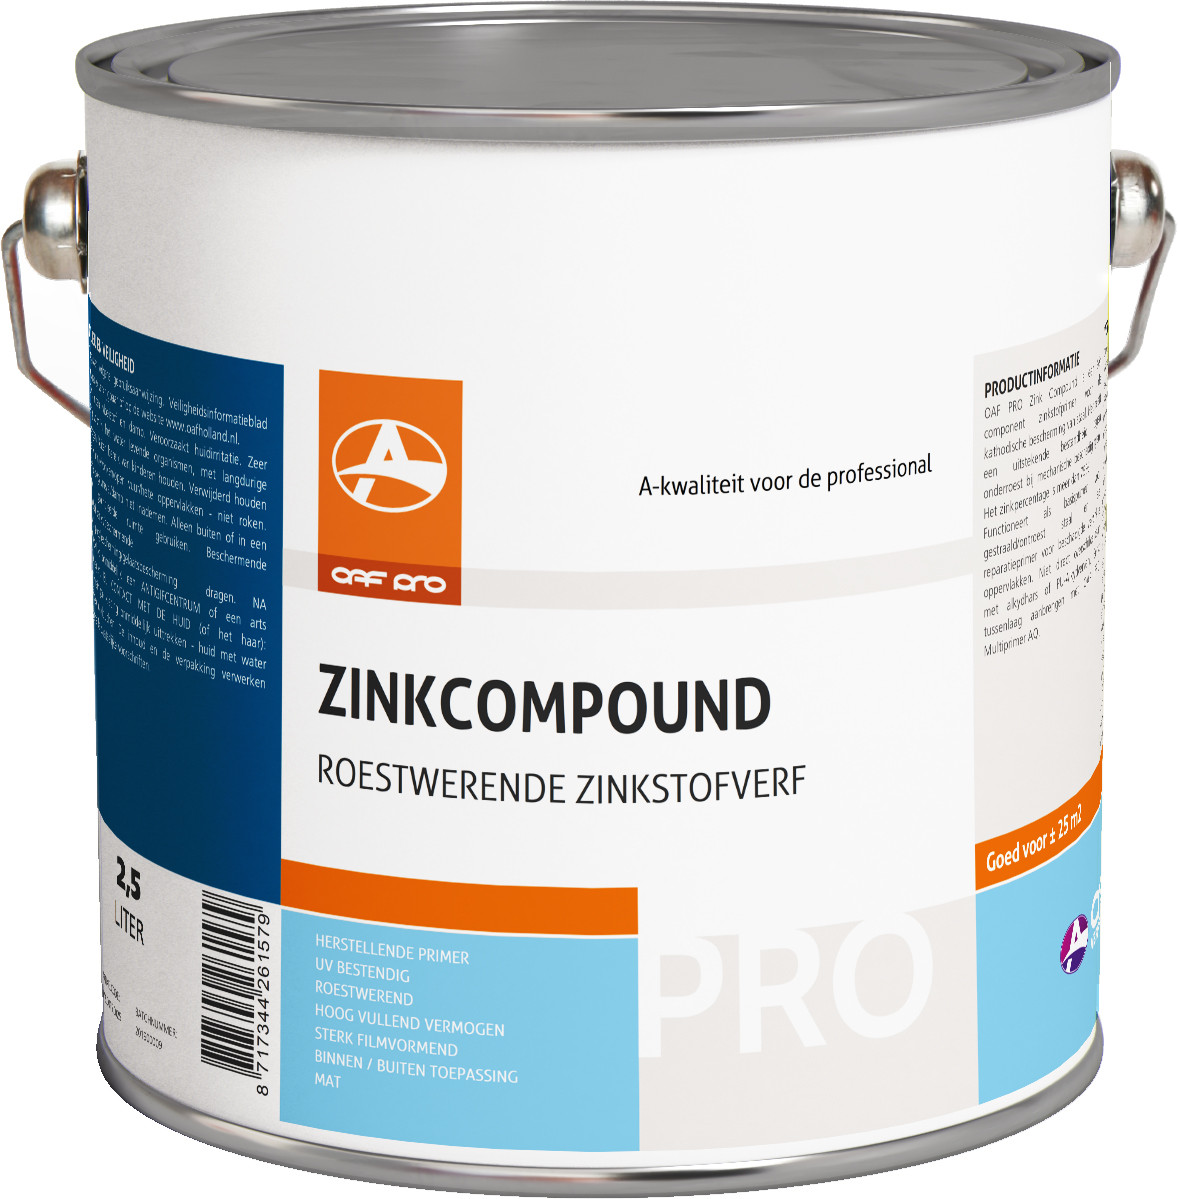 OAF PRO Zinkcompound 2,5 liter / 5 kg